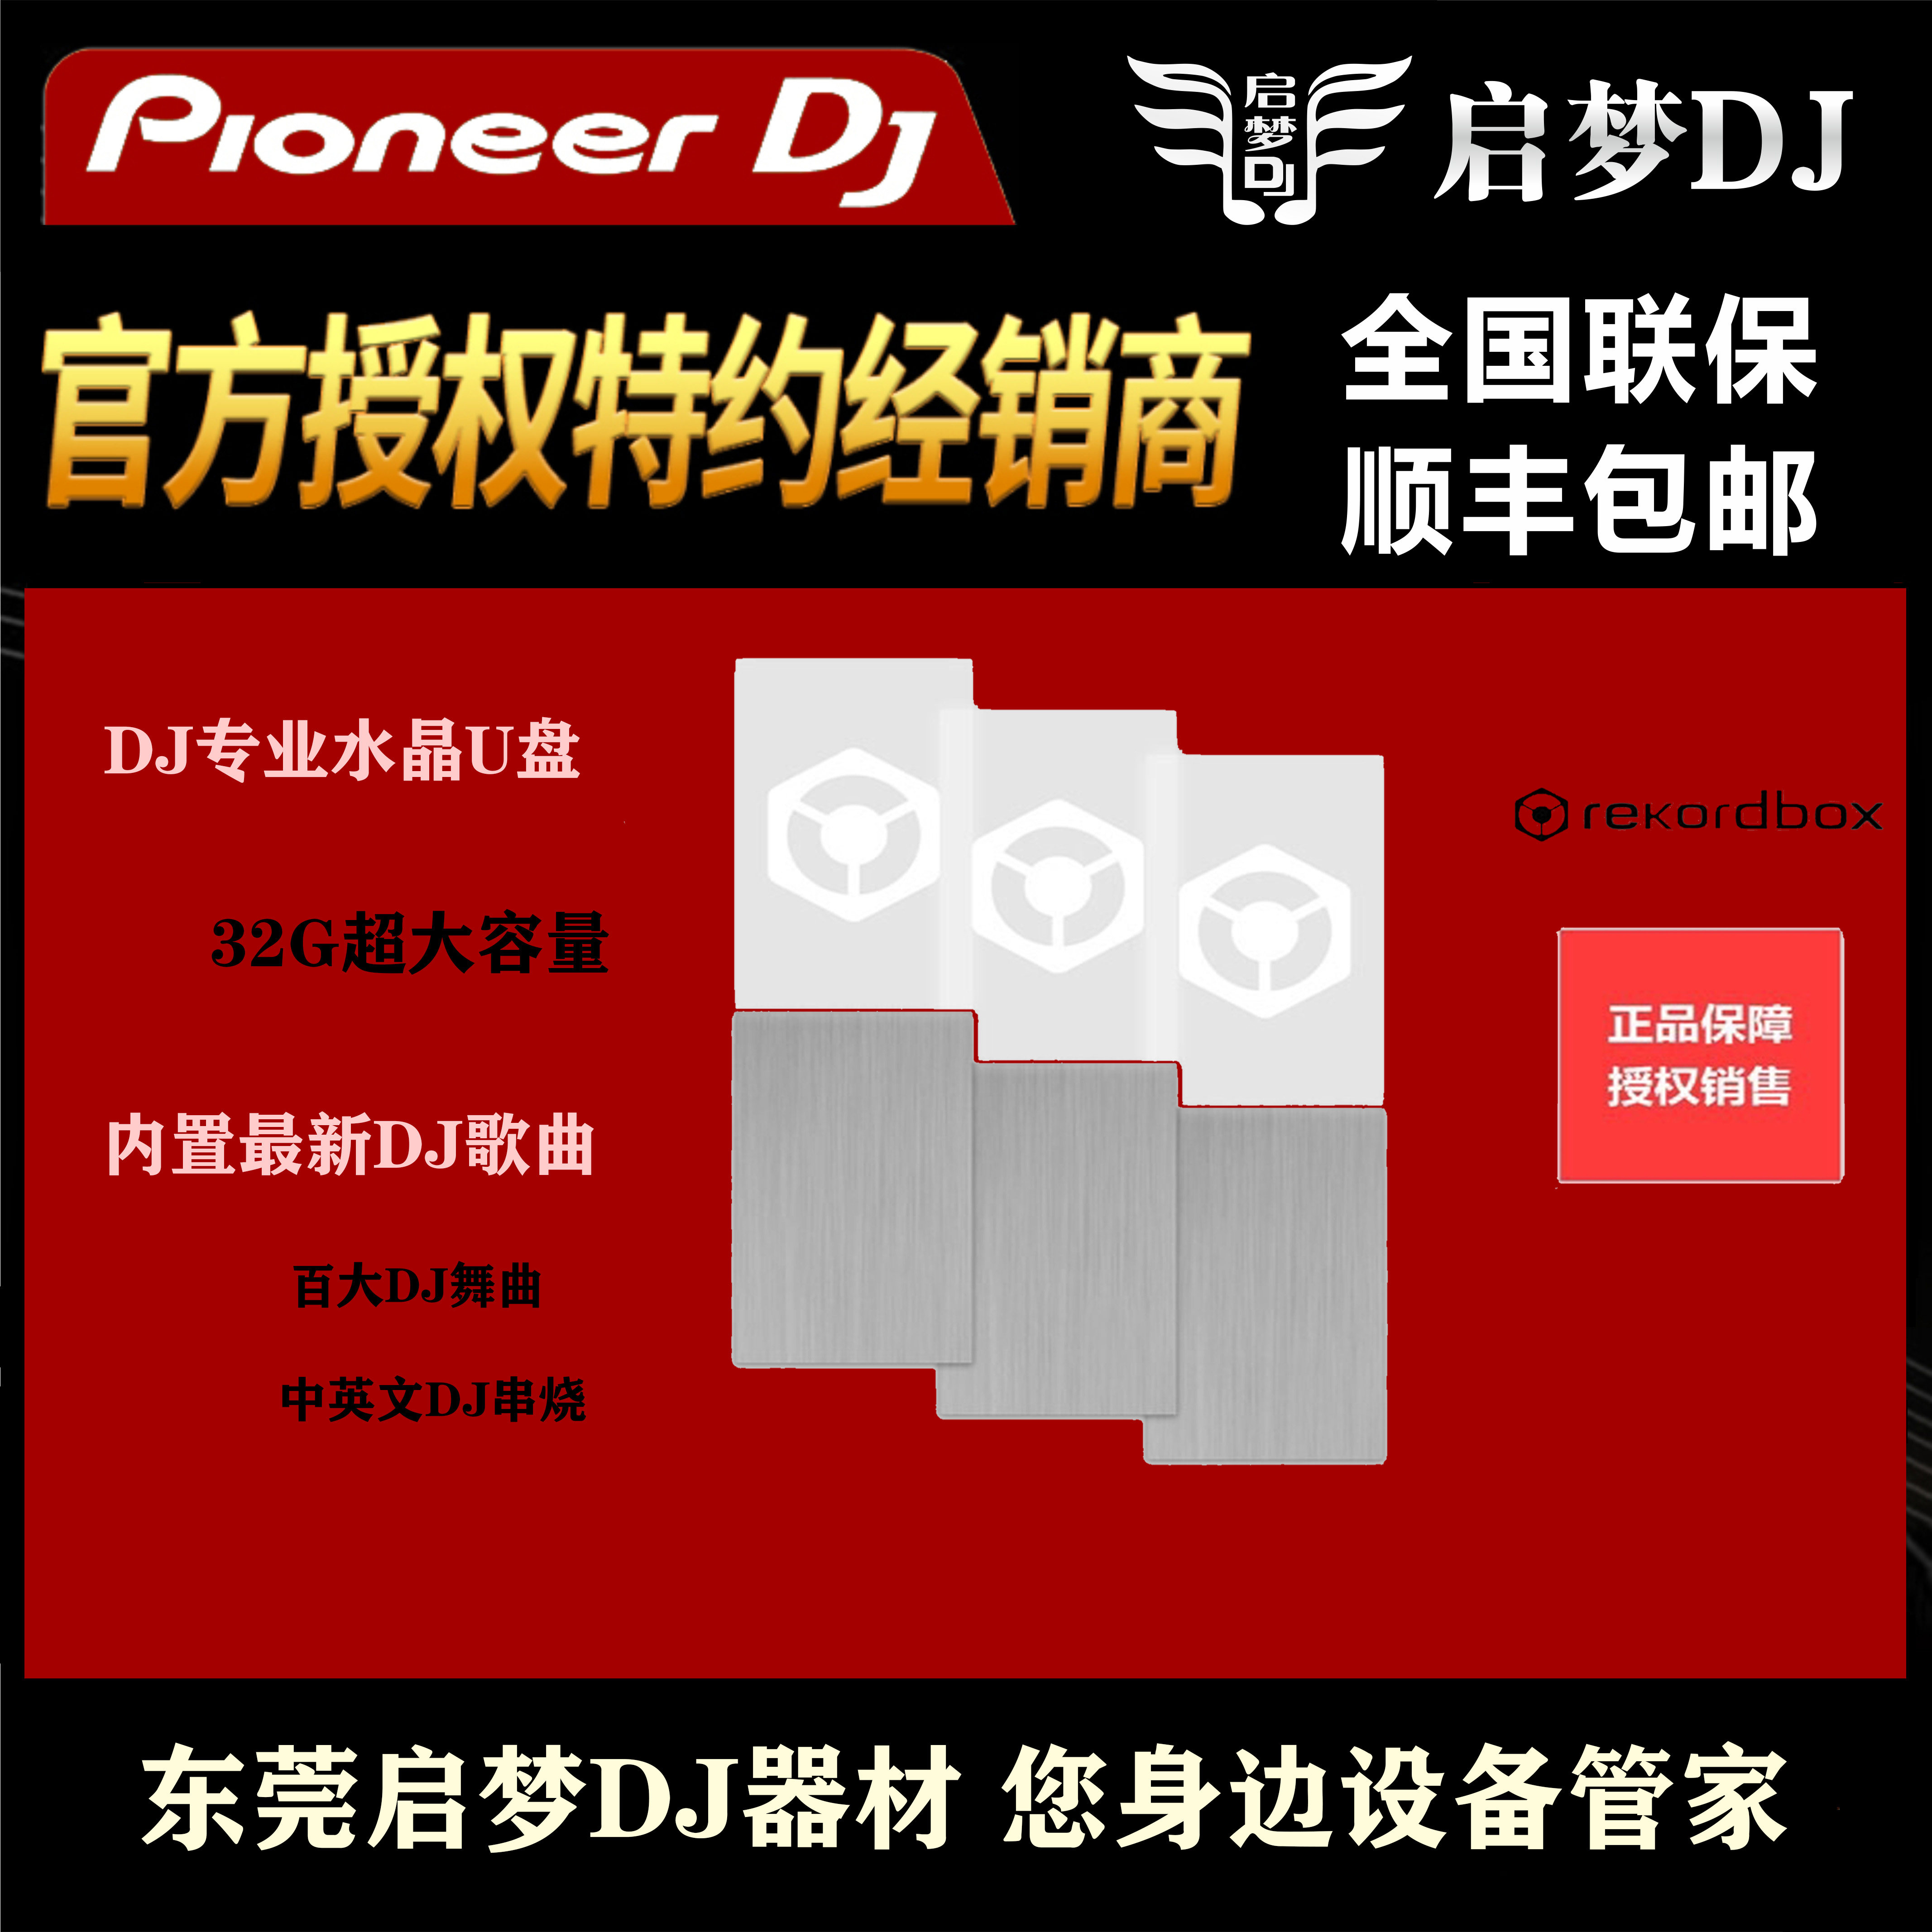 DJ dedicated 3.0 high-speed crystal USB stick 32G memory Pioneer DJ player U disk to send new top 100 DJ dance music